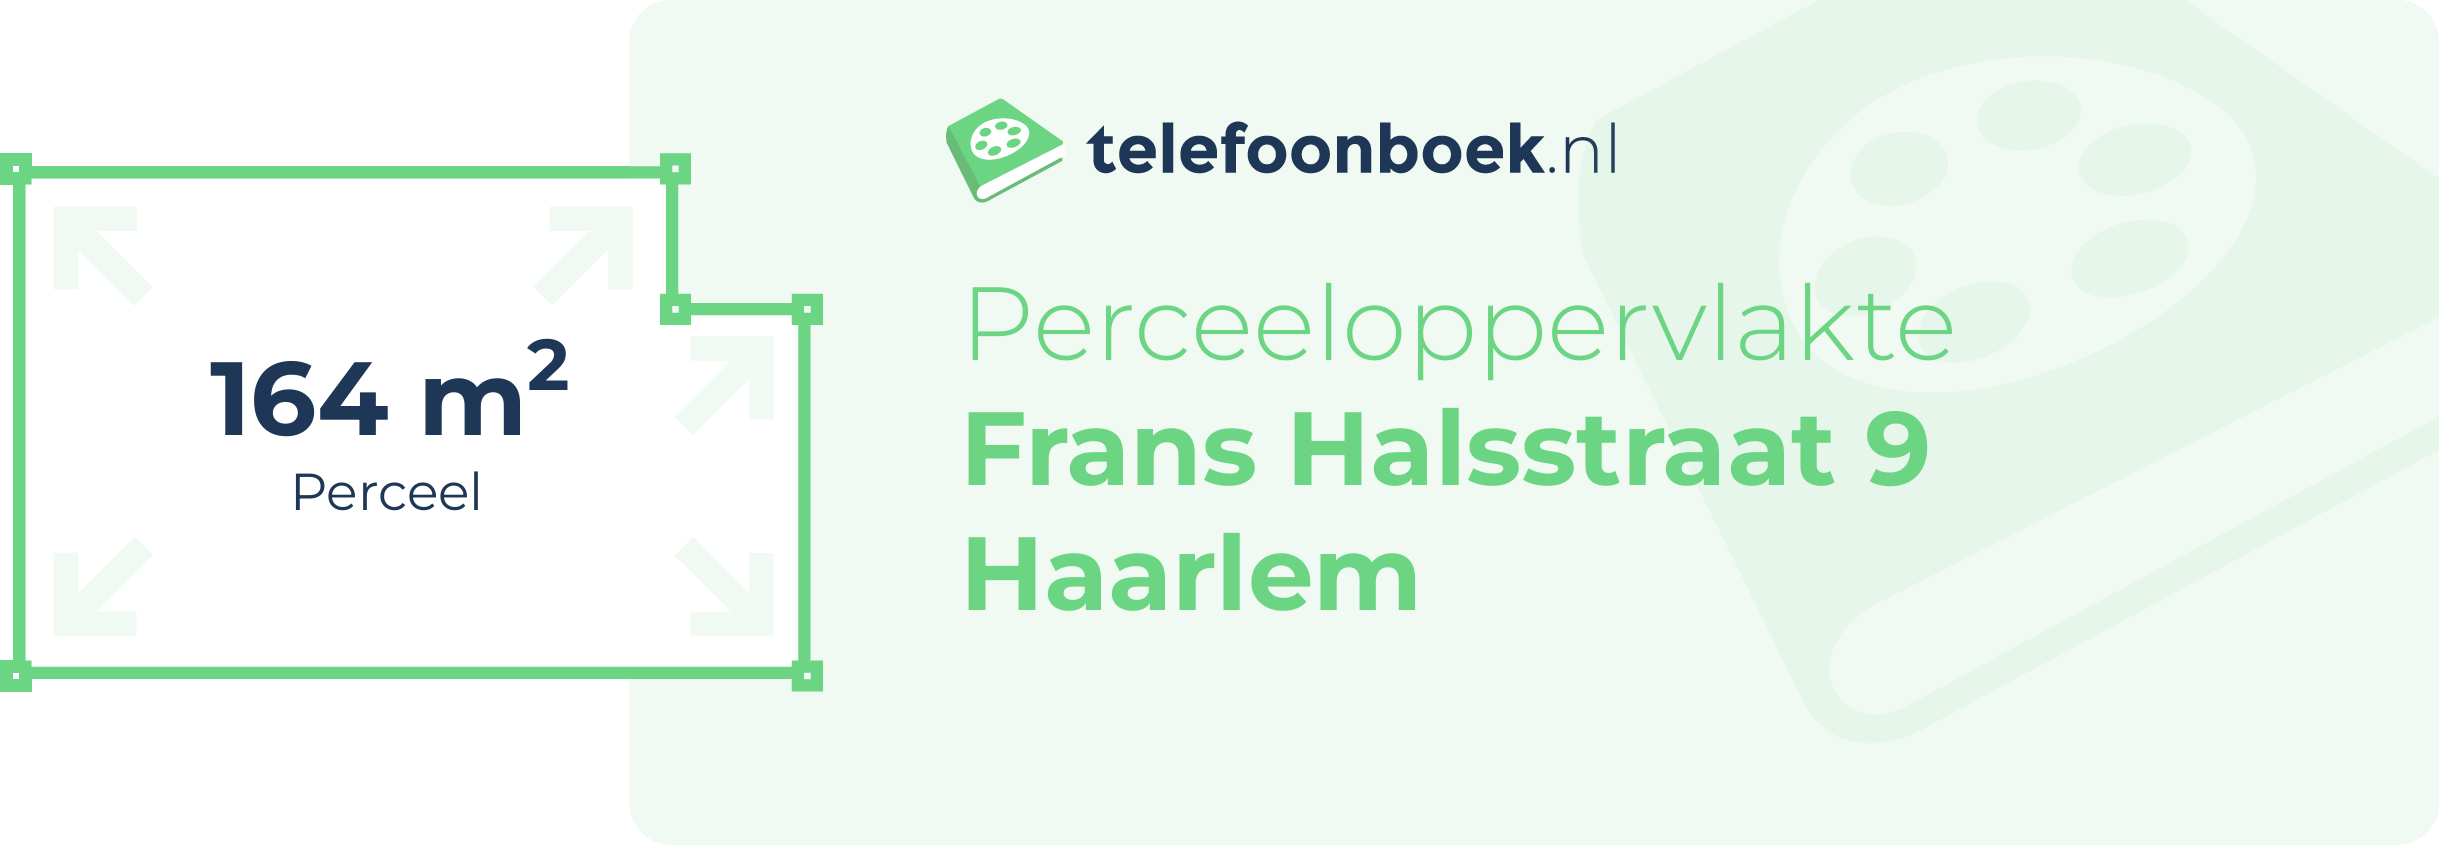 Perceeloppervlakte Frans Halsstraat 9 Haarlem